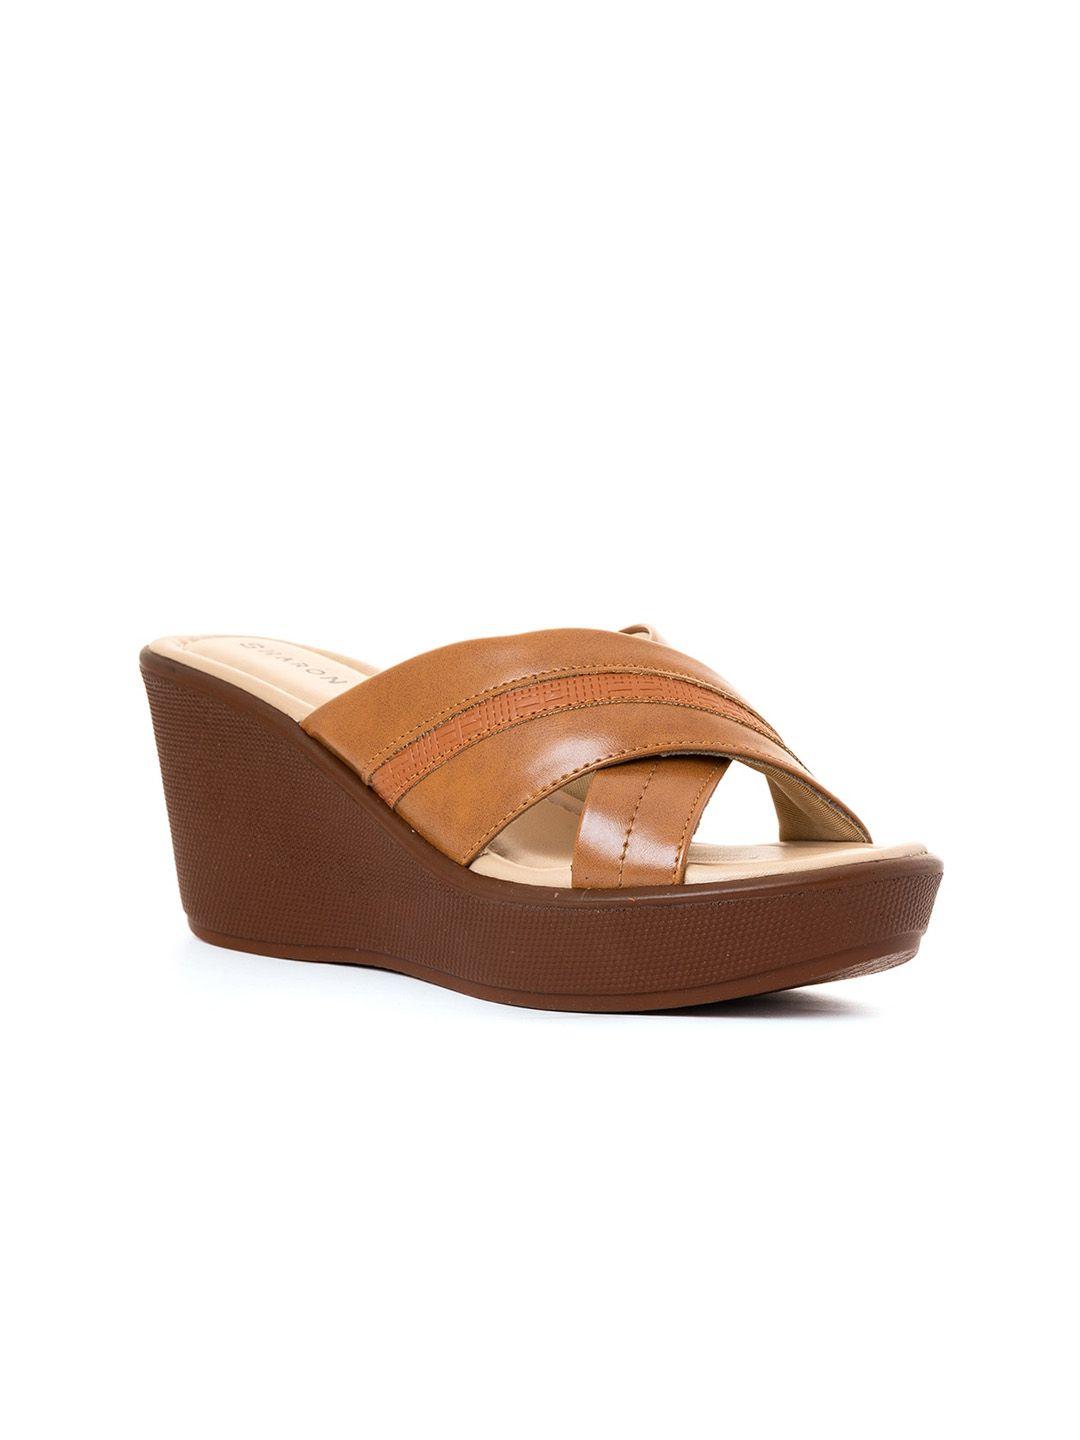 khadims women tan & brown solid synthetic wedge heels